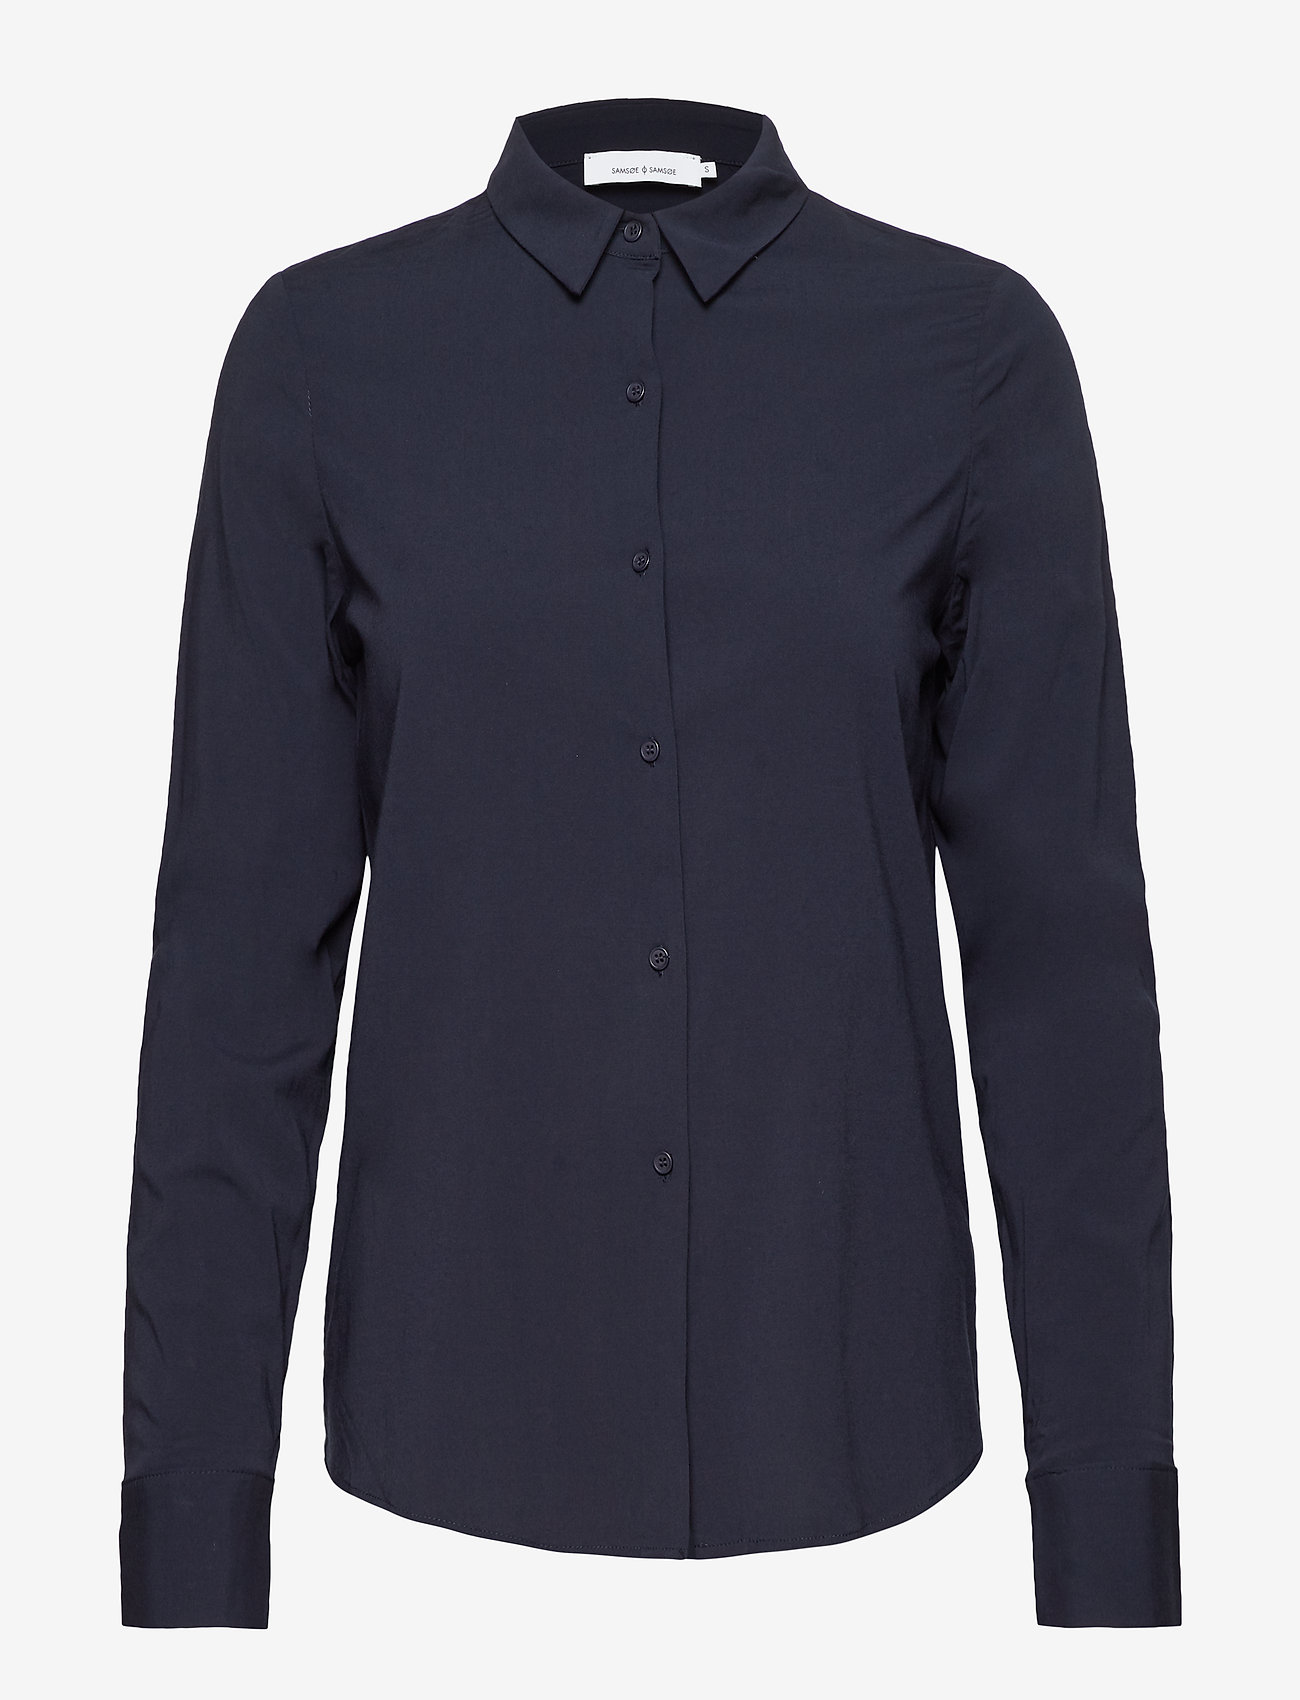 Samsøe Samsøe - Milly np shirt 9942 - langermede skjorter - dark sapphire - 0